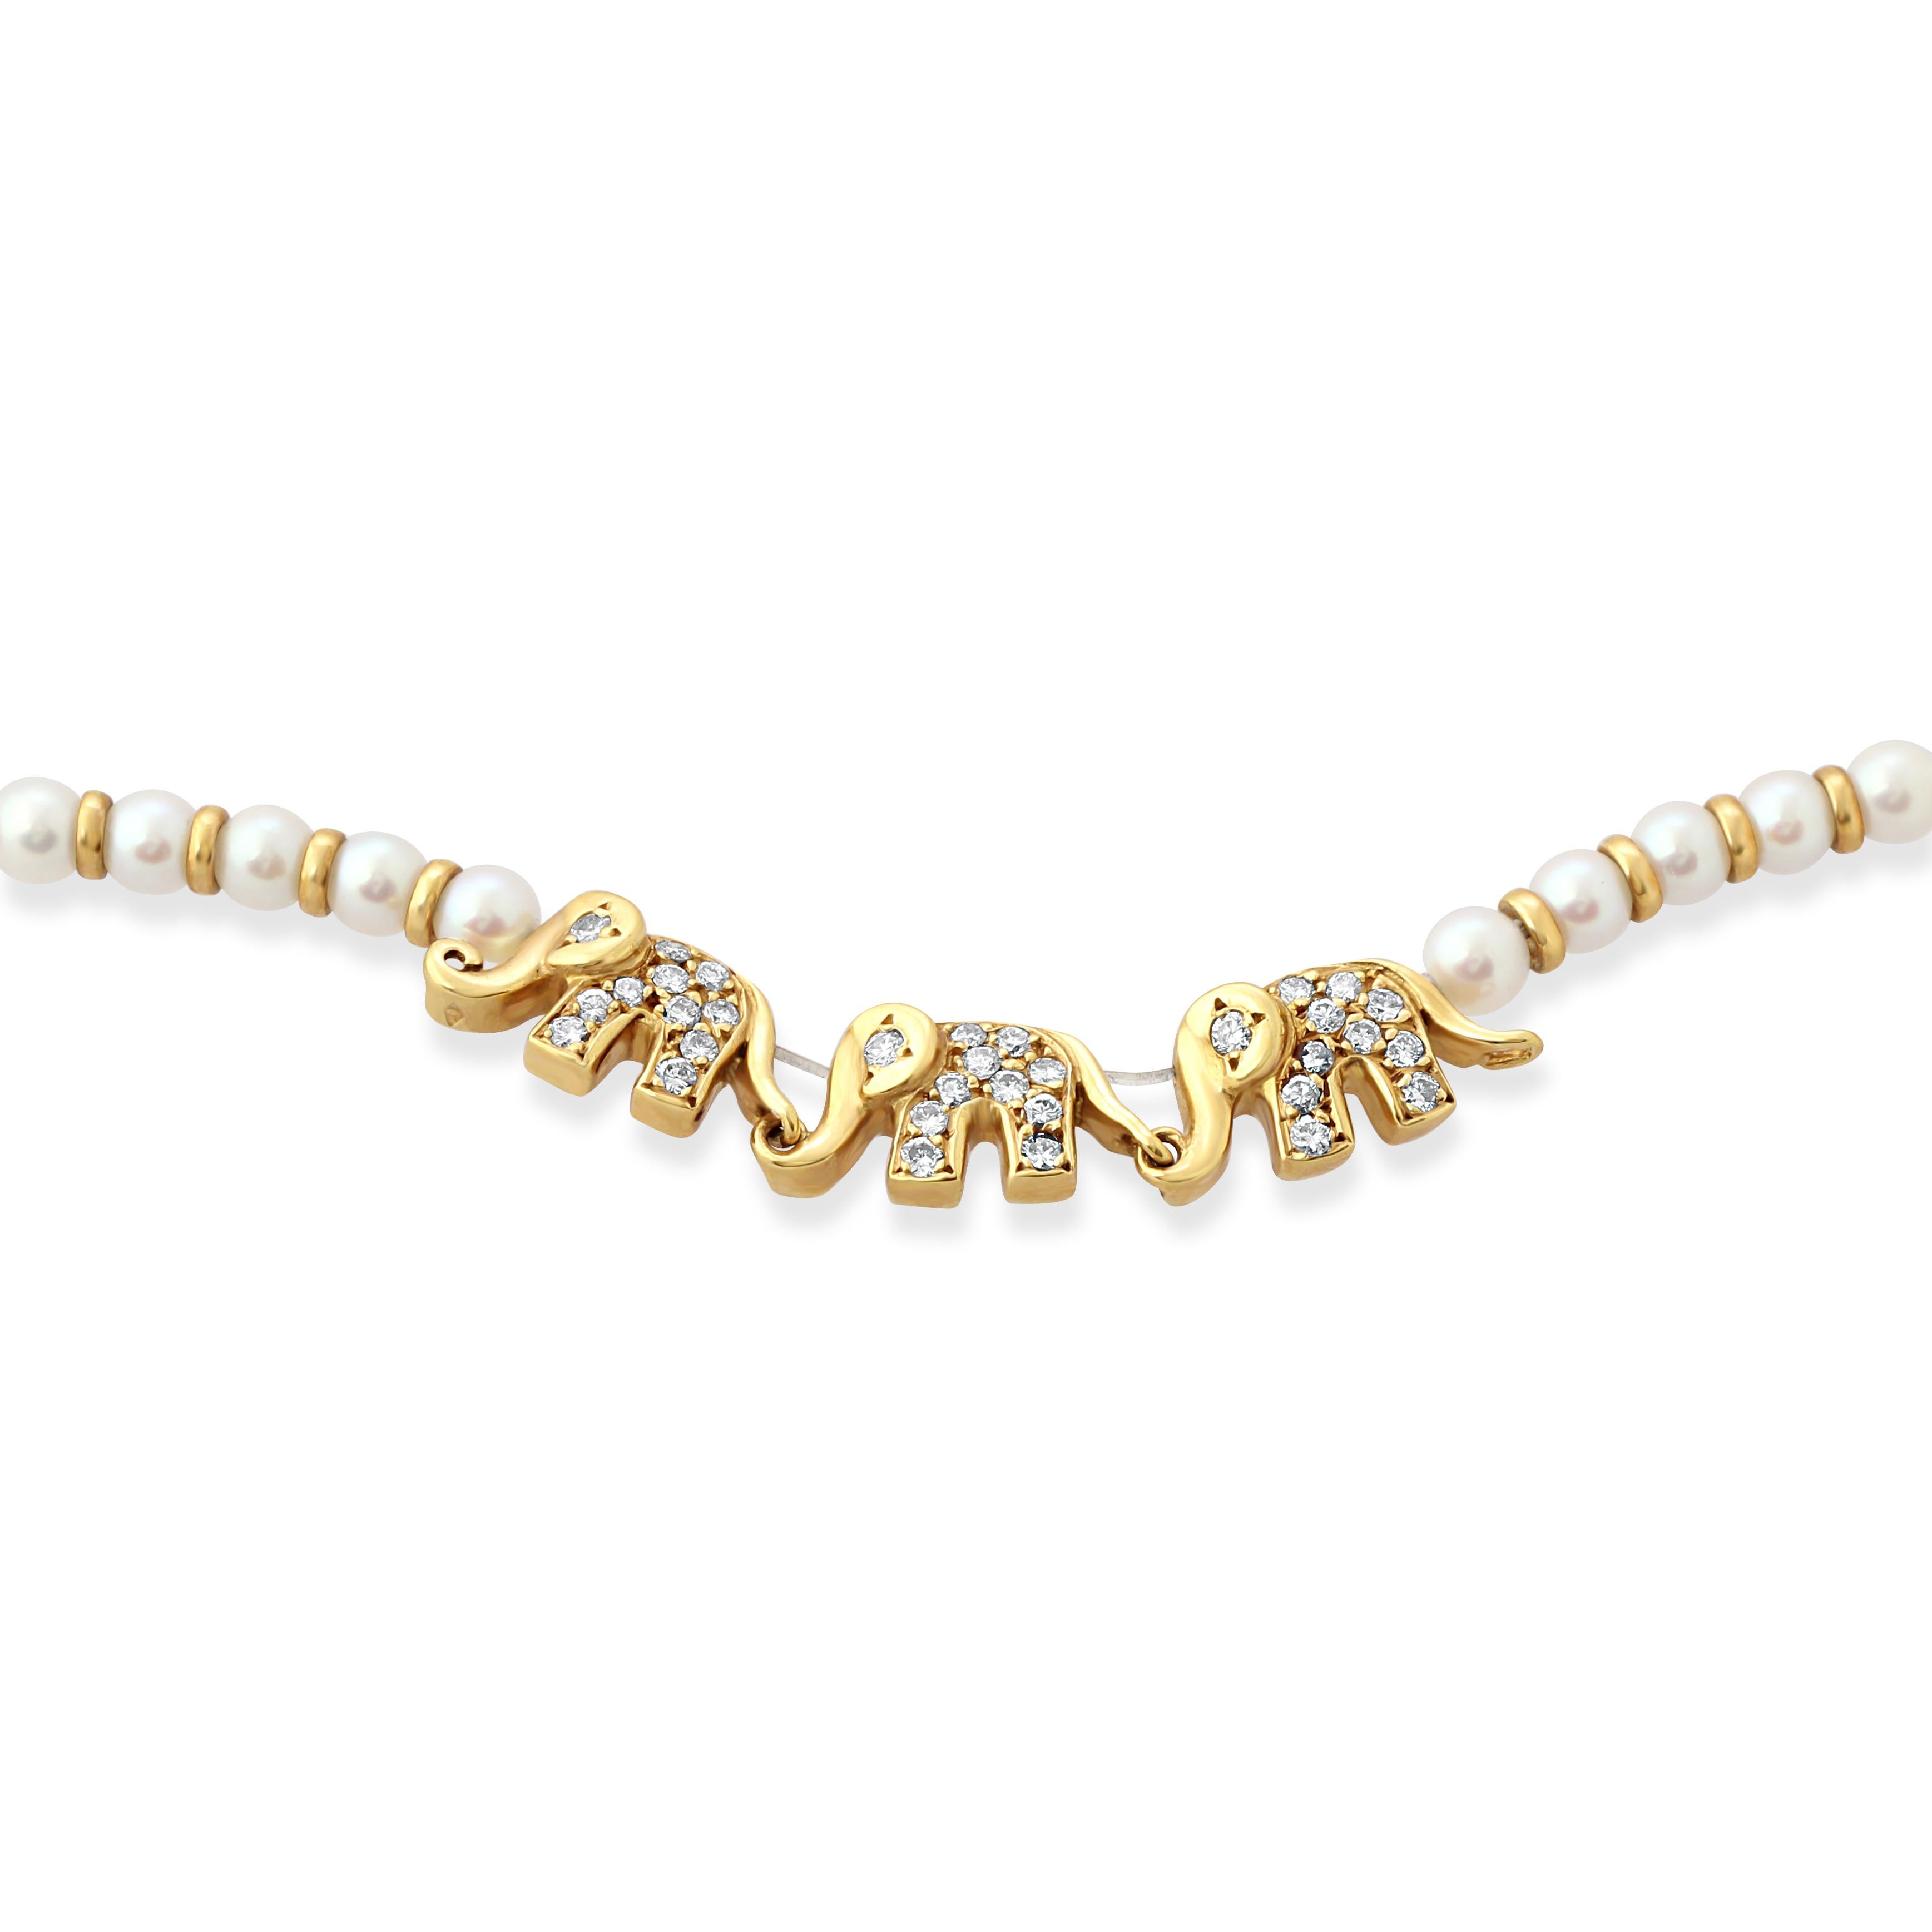 Brilliant Cut Pearl & Diamond Elephant Necklace by Fred, Paris